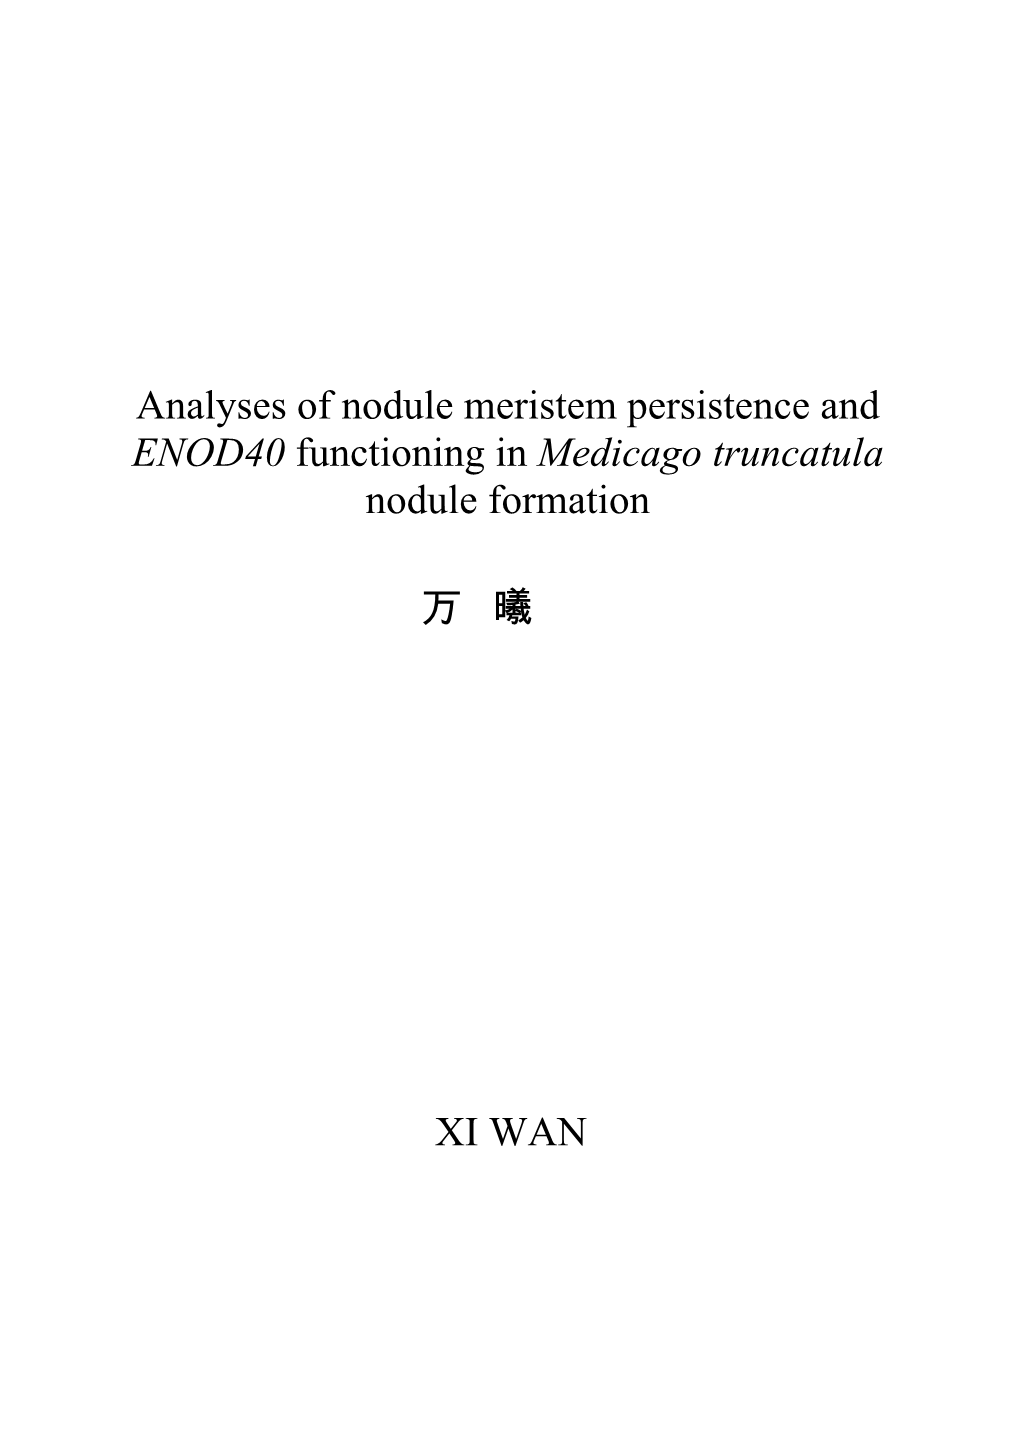 Analysis of Nodule Meristem Persistence and ENOD40